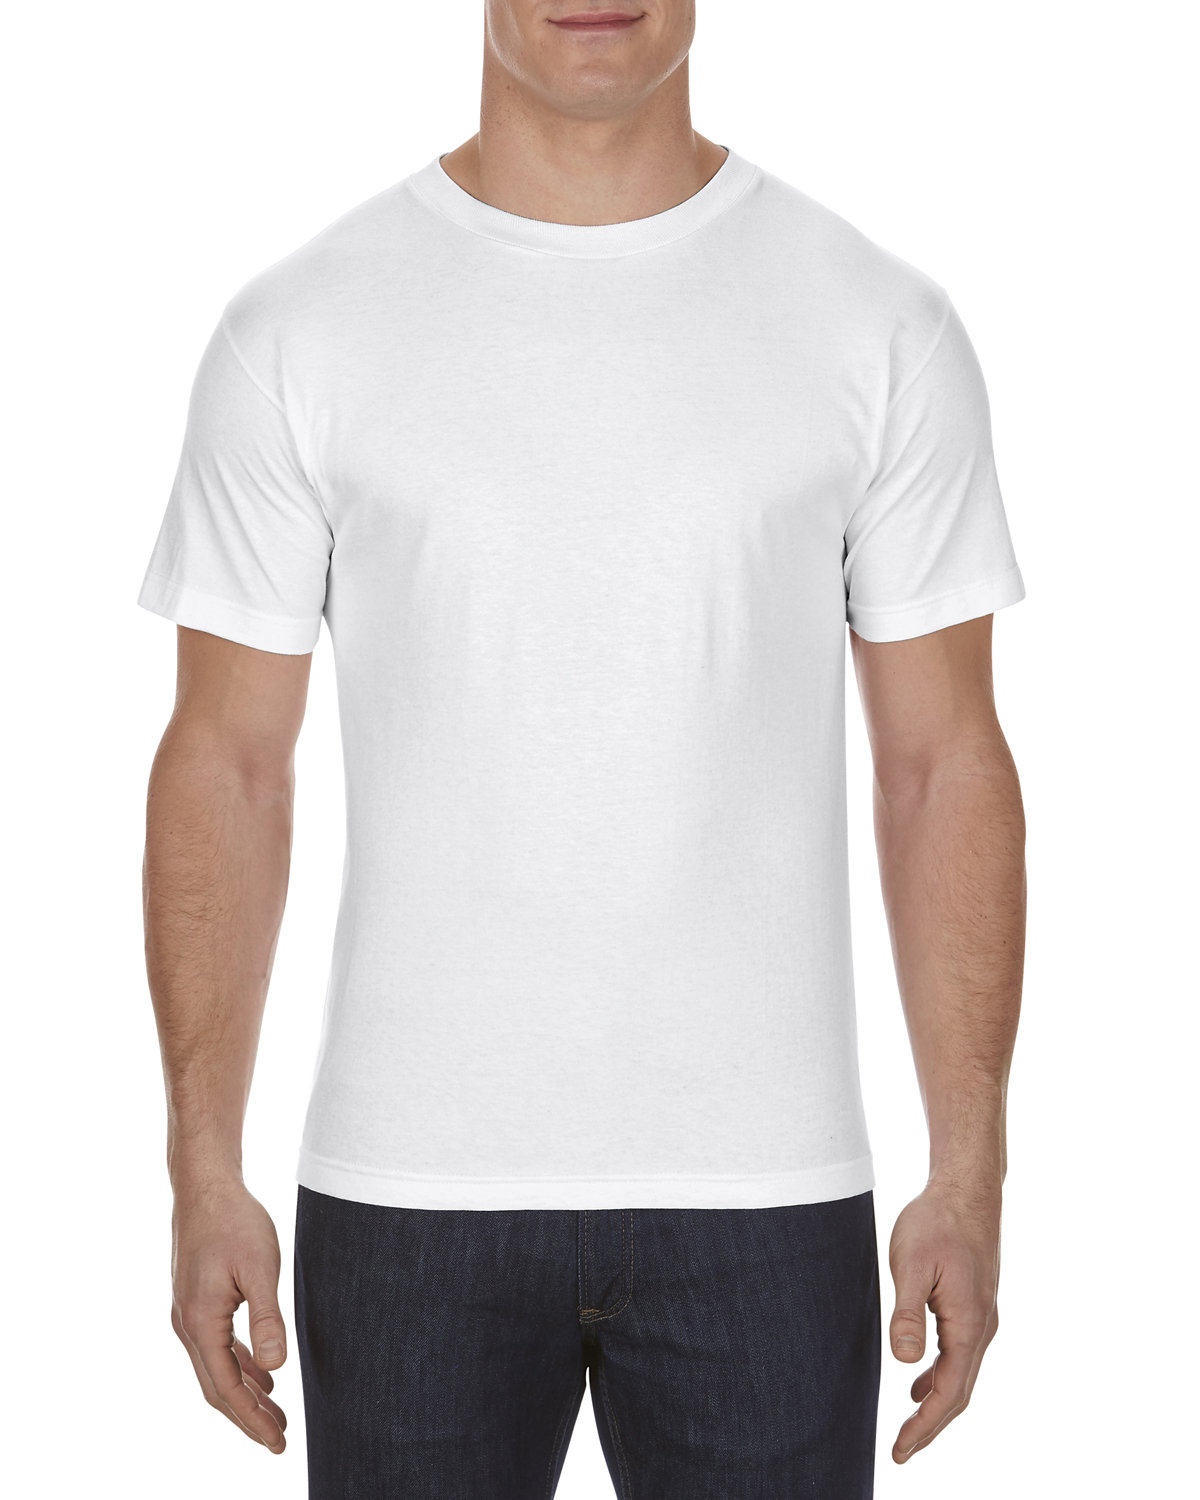 Alstyle Adult 6.0 oz., 100% Cotton T-Shirt WHITE 